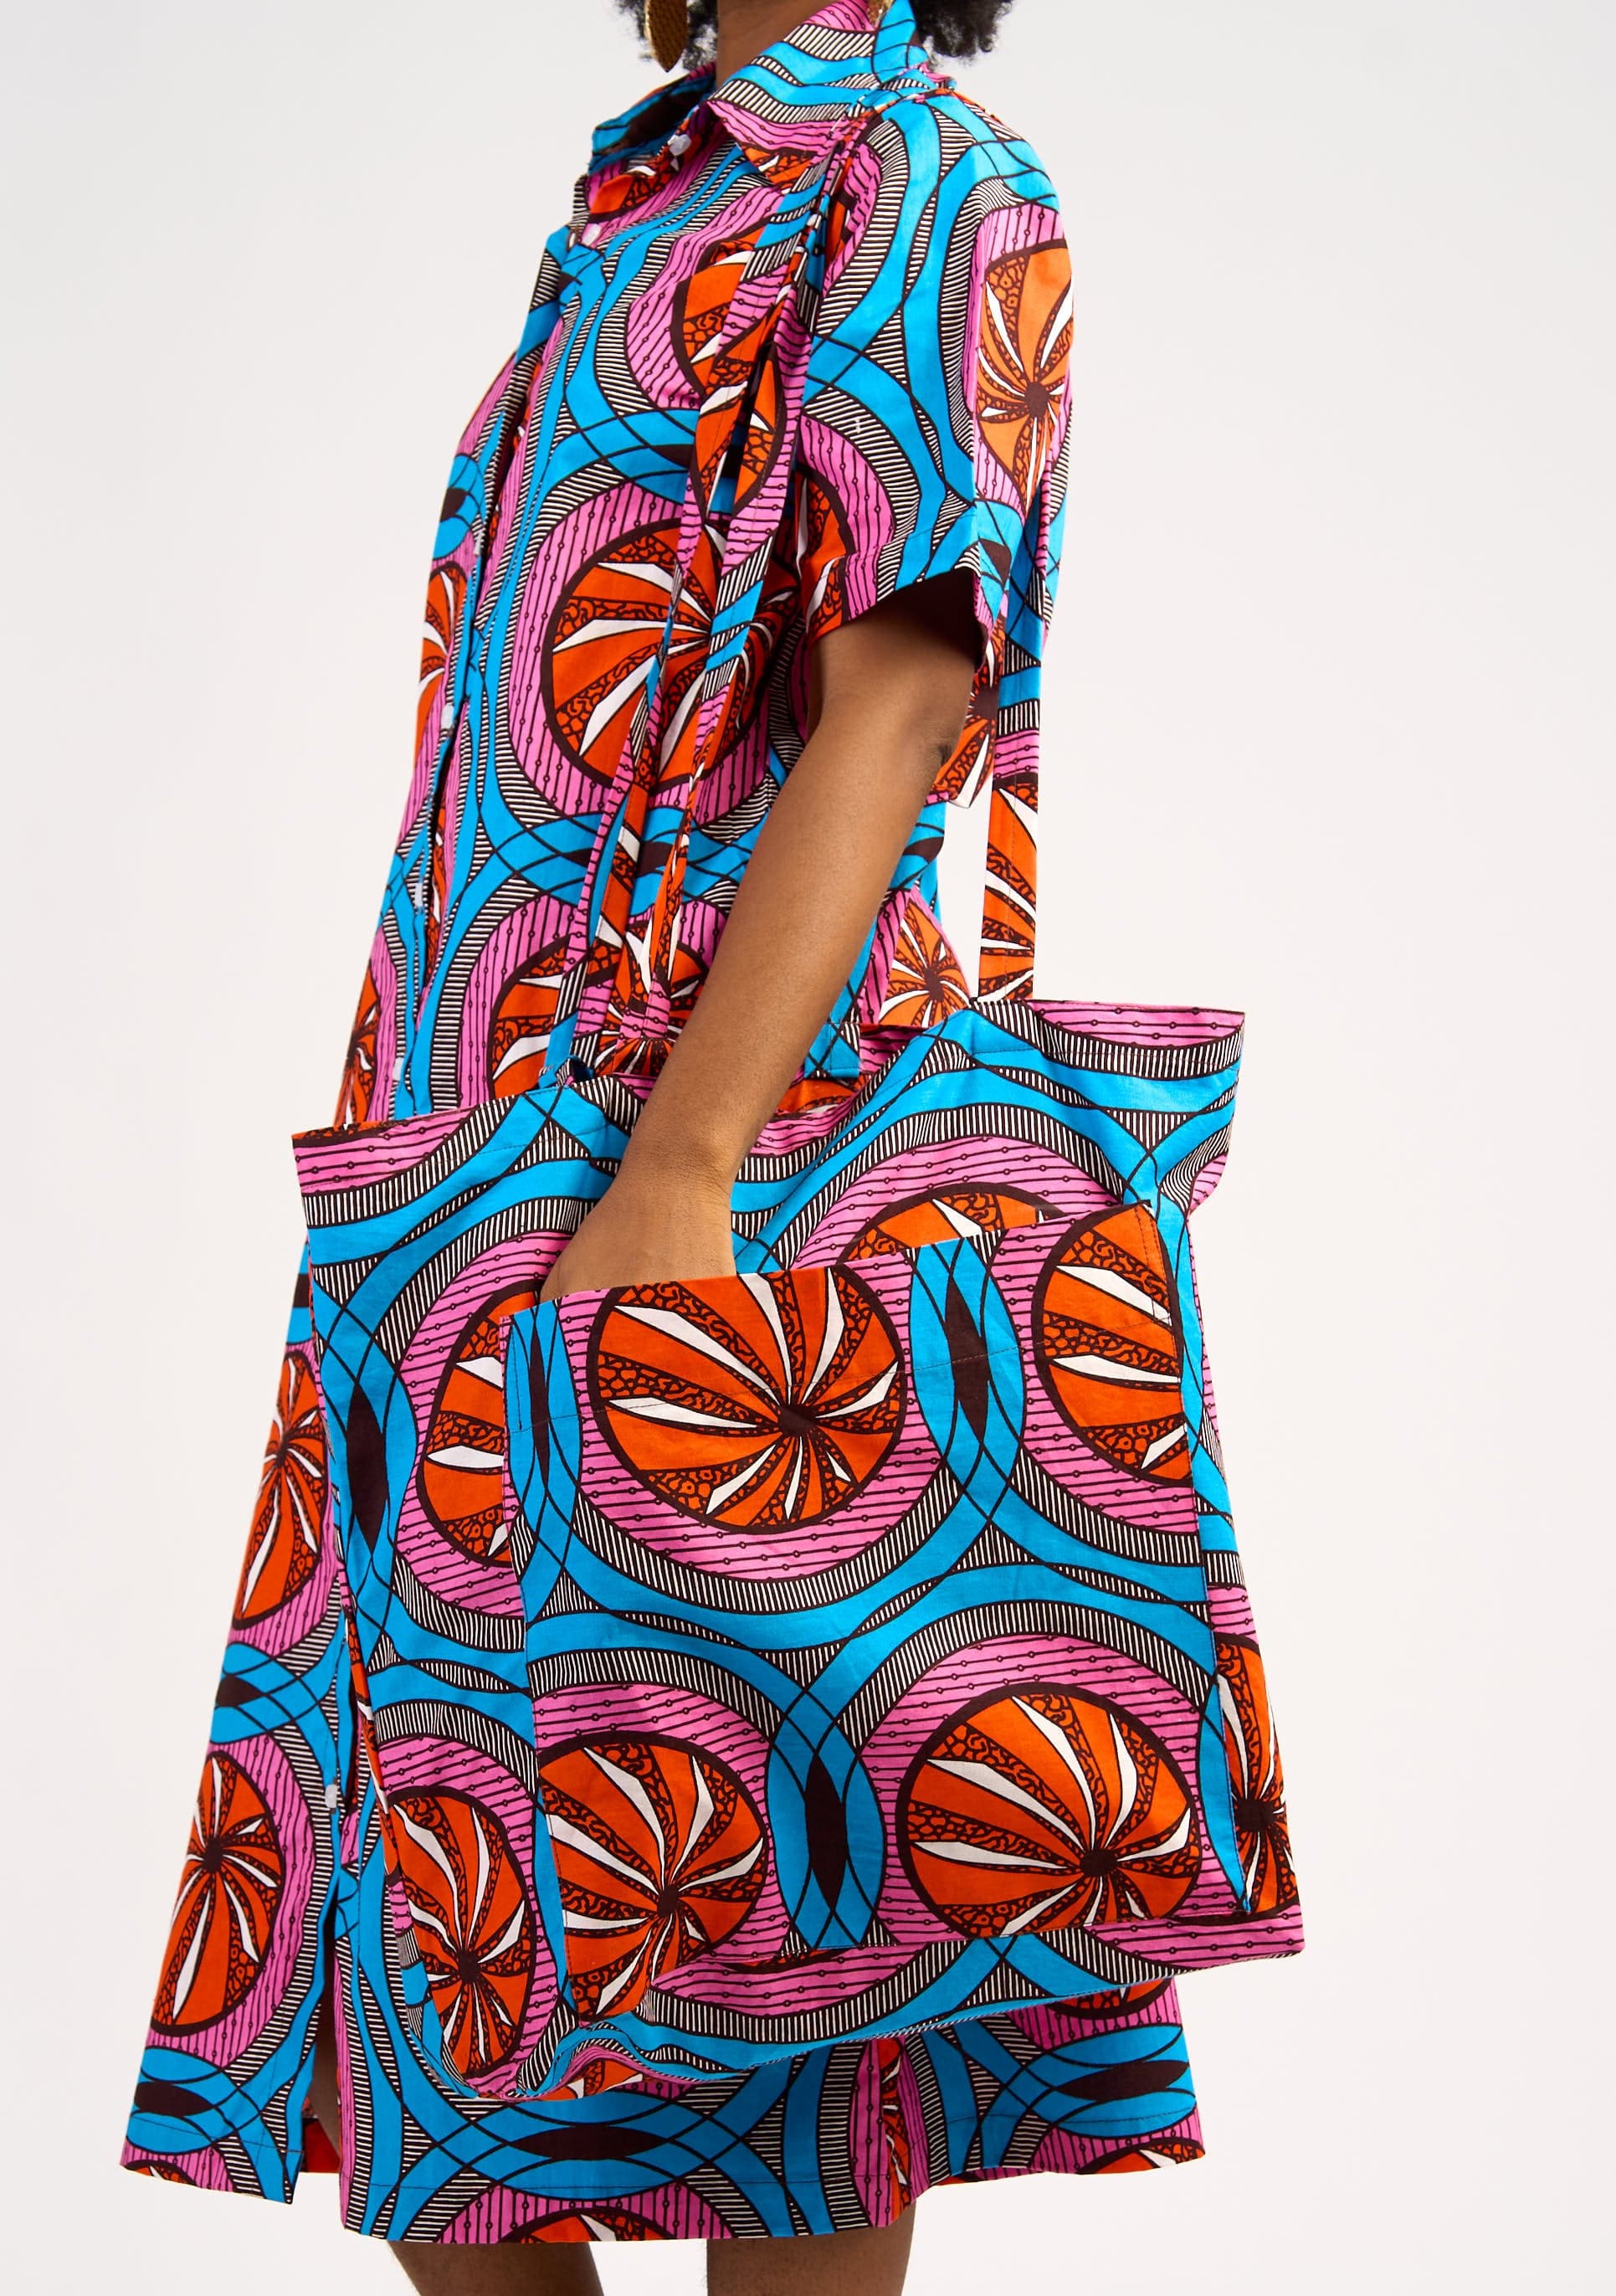 YEVU Accessories - Bag Double Strap Bag - Tangerine Dreams